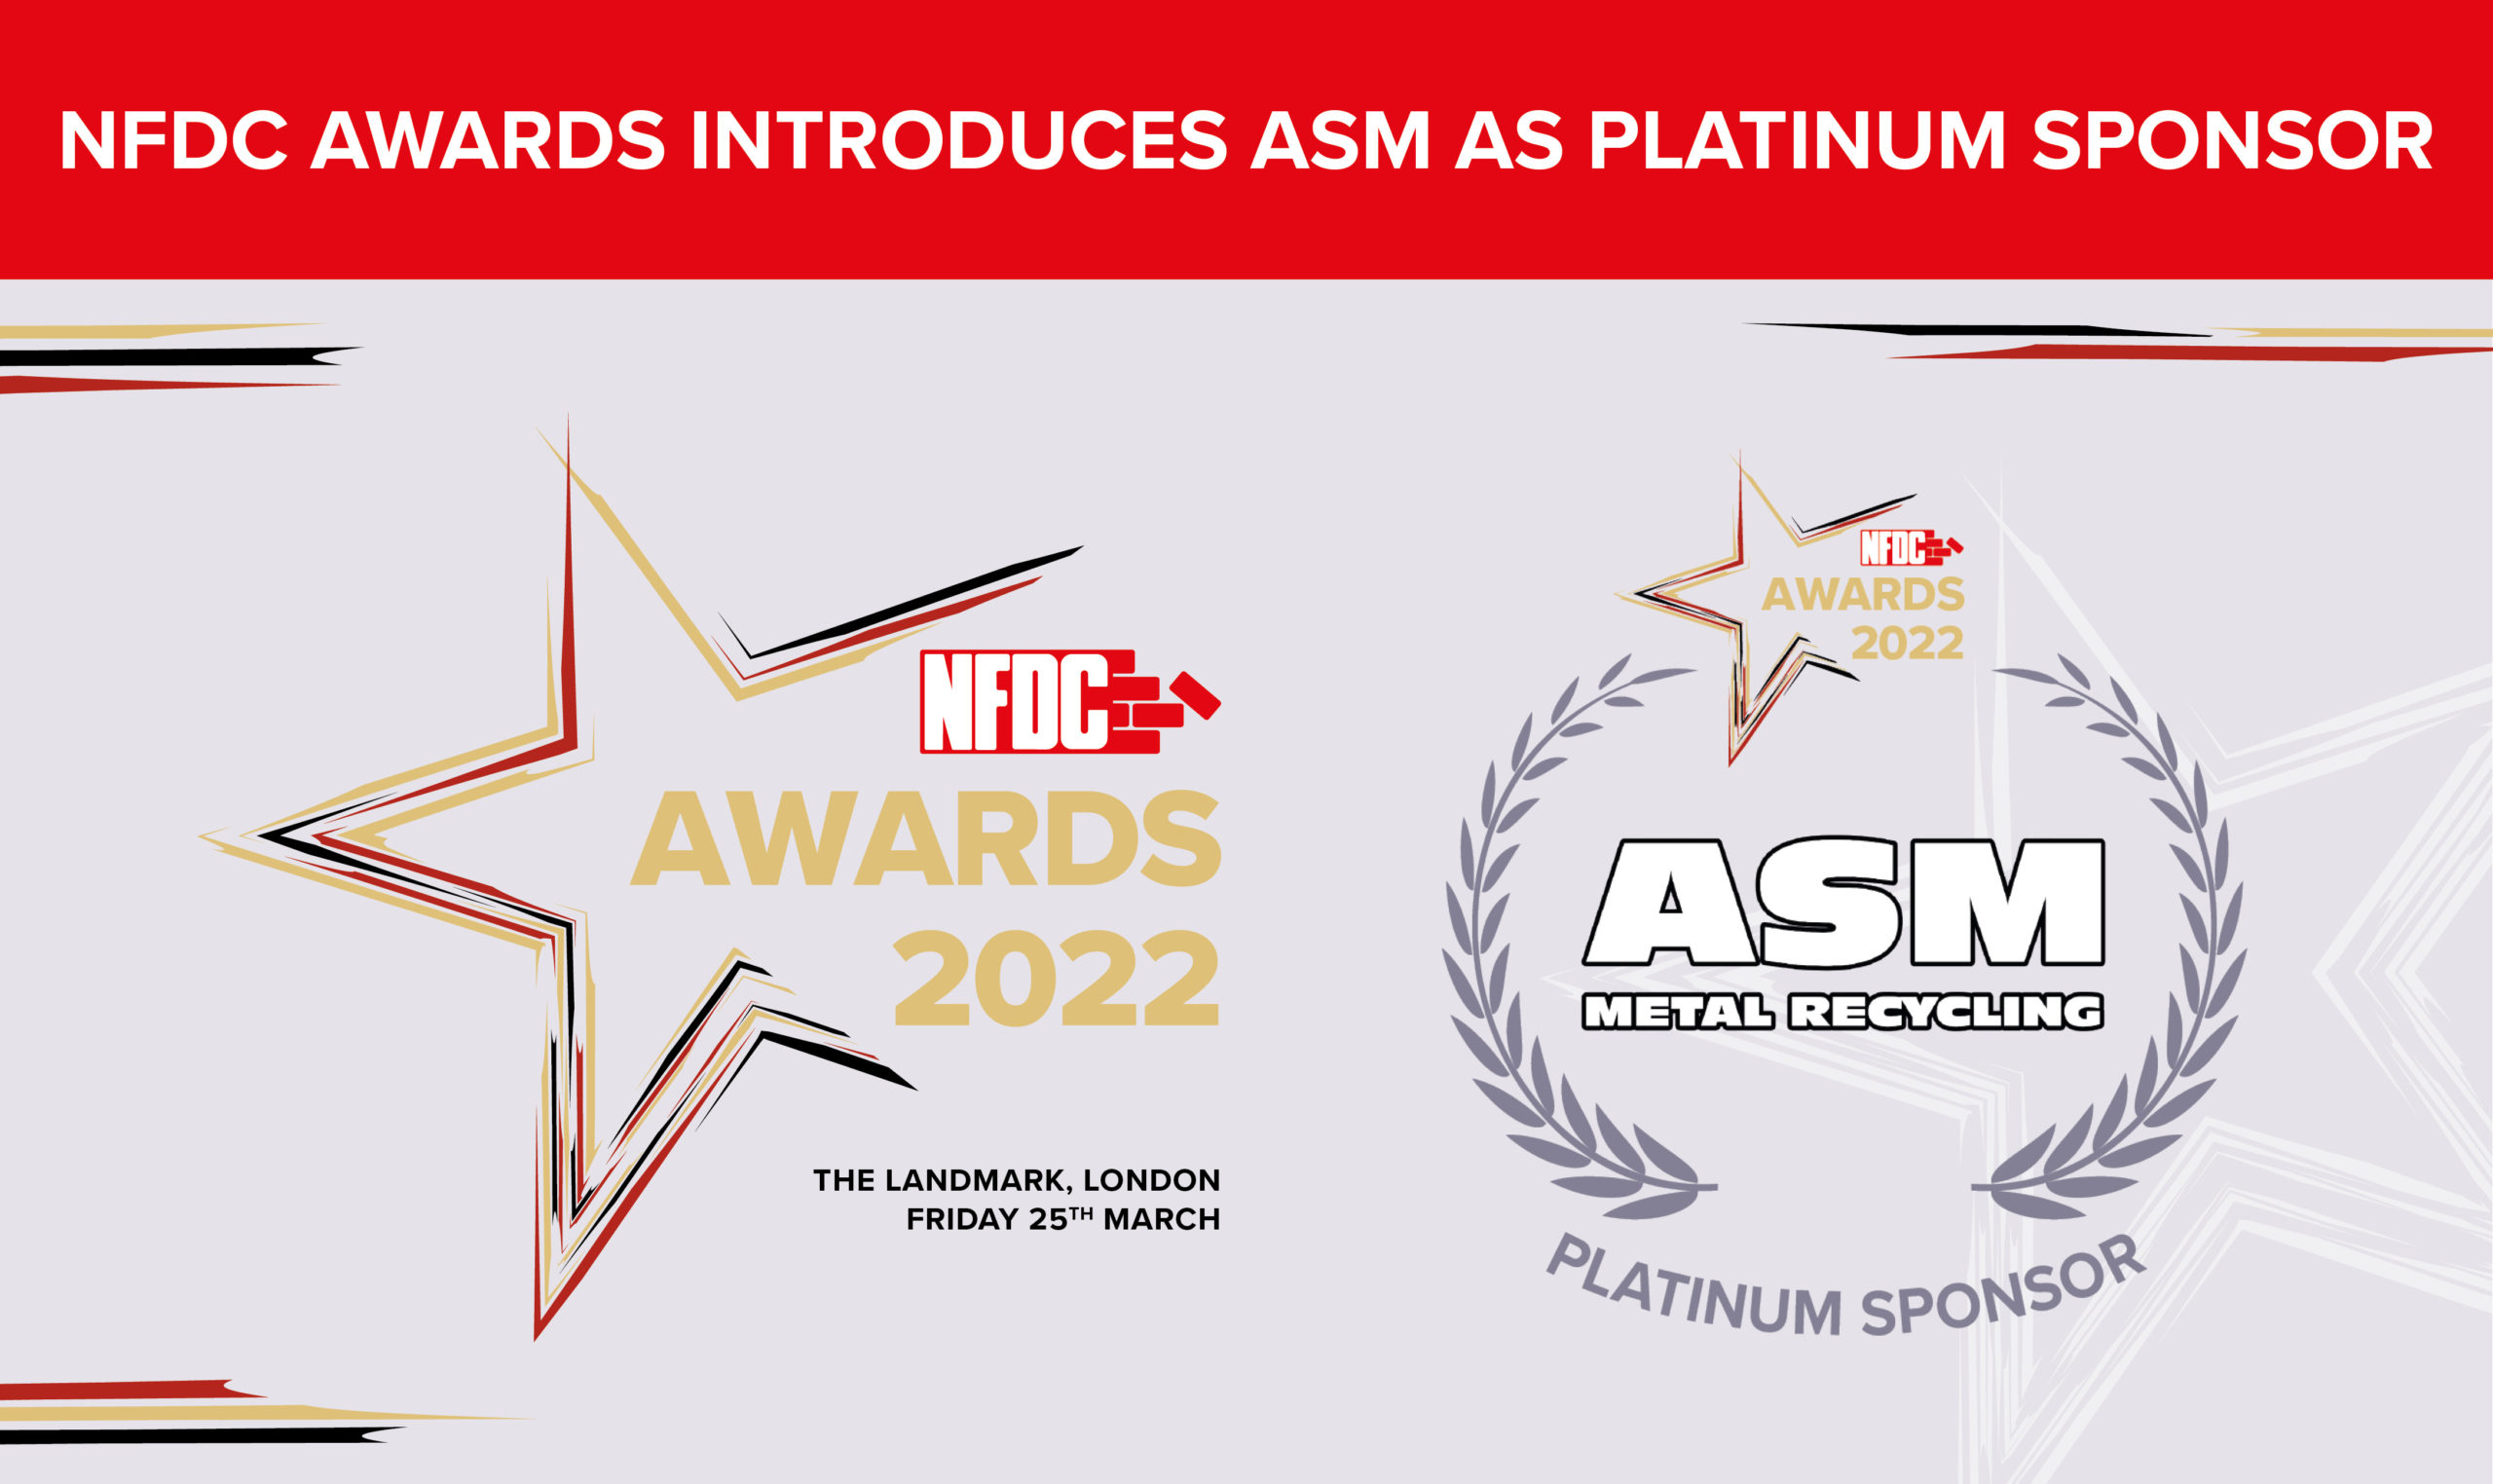 ASM Metal Recycling Announced as Platinum Sponsor of NFDC Awards